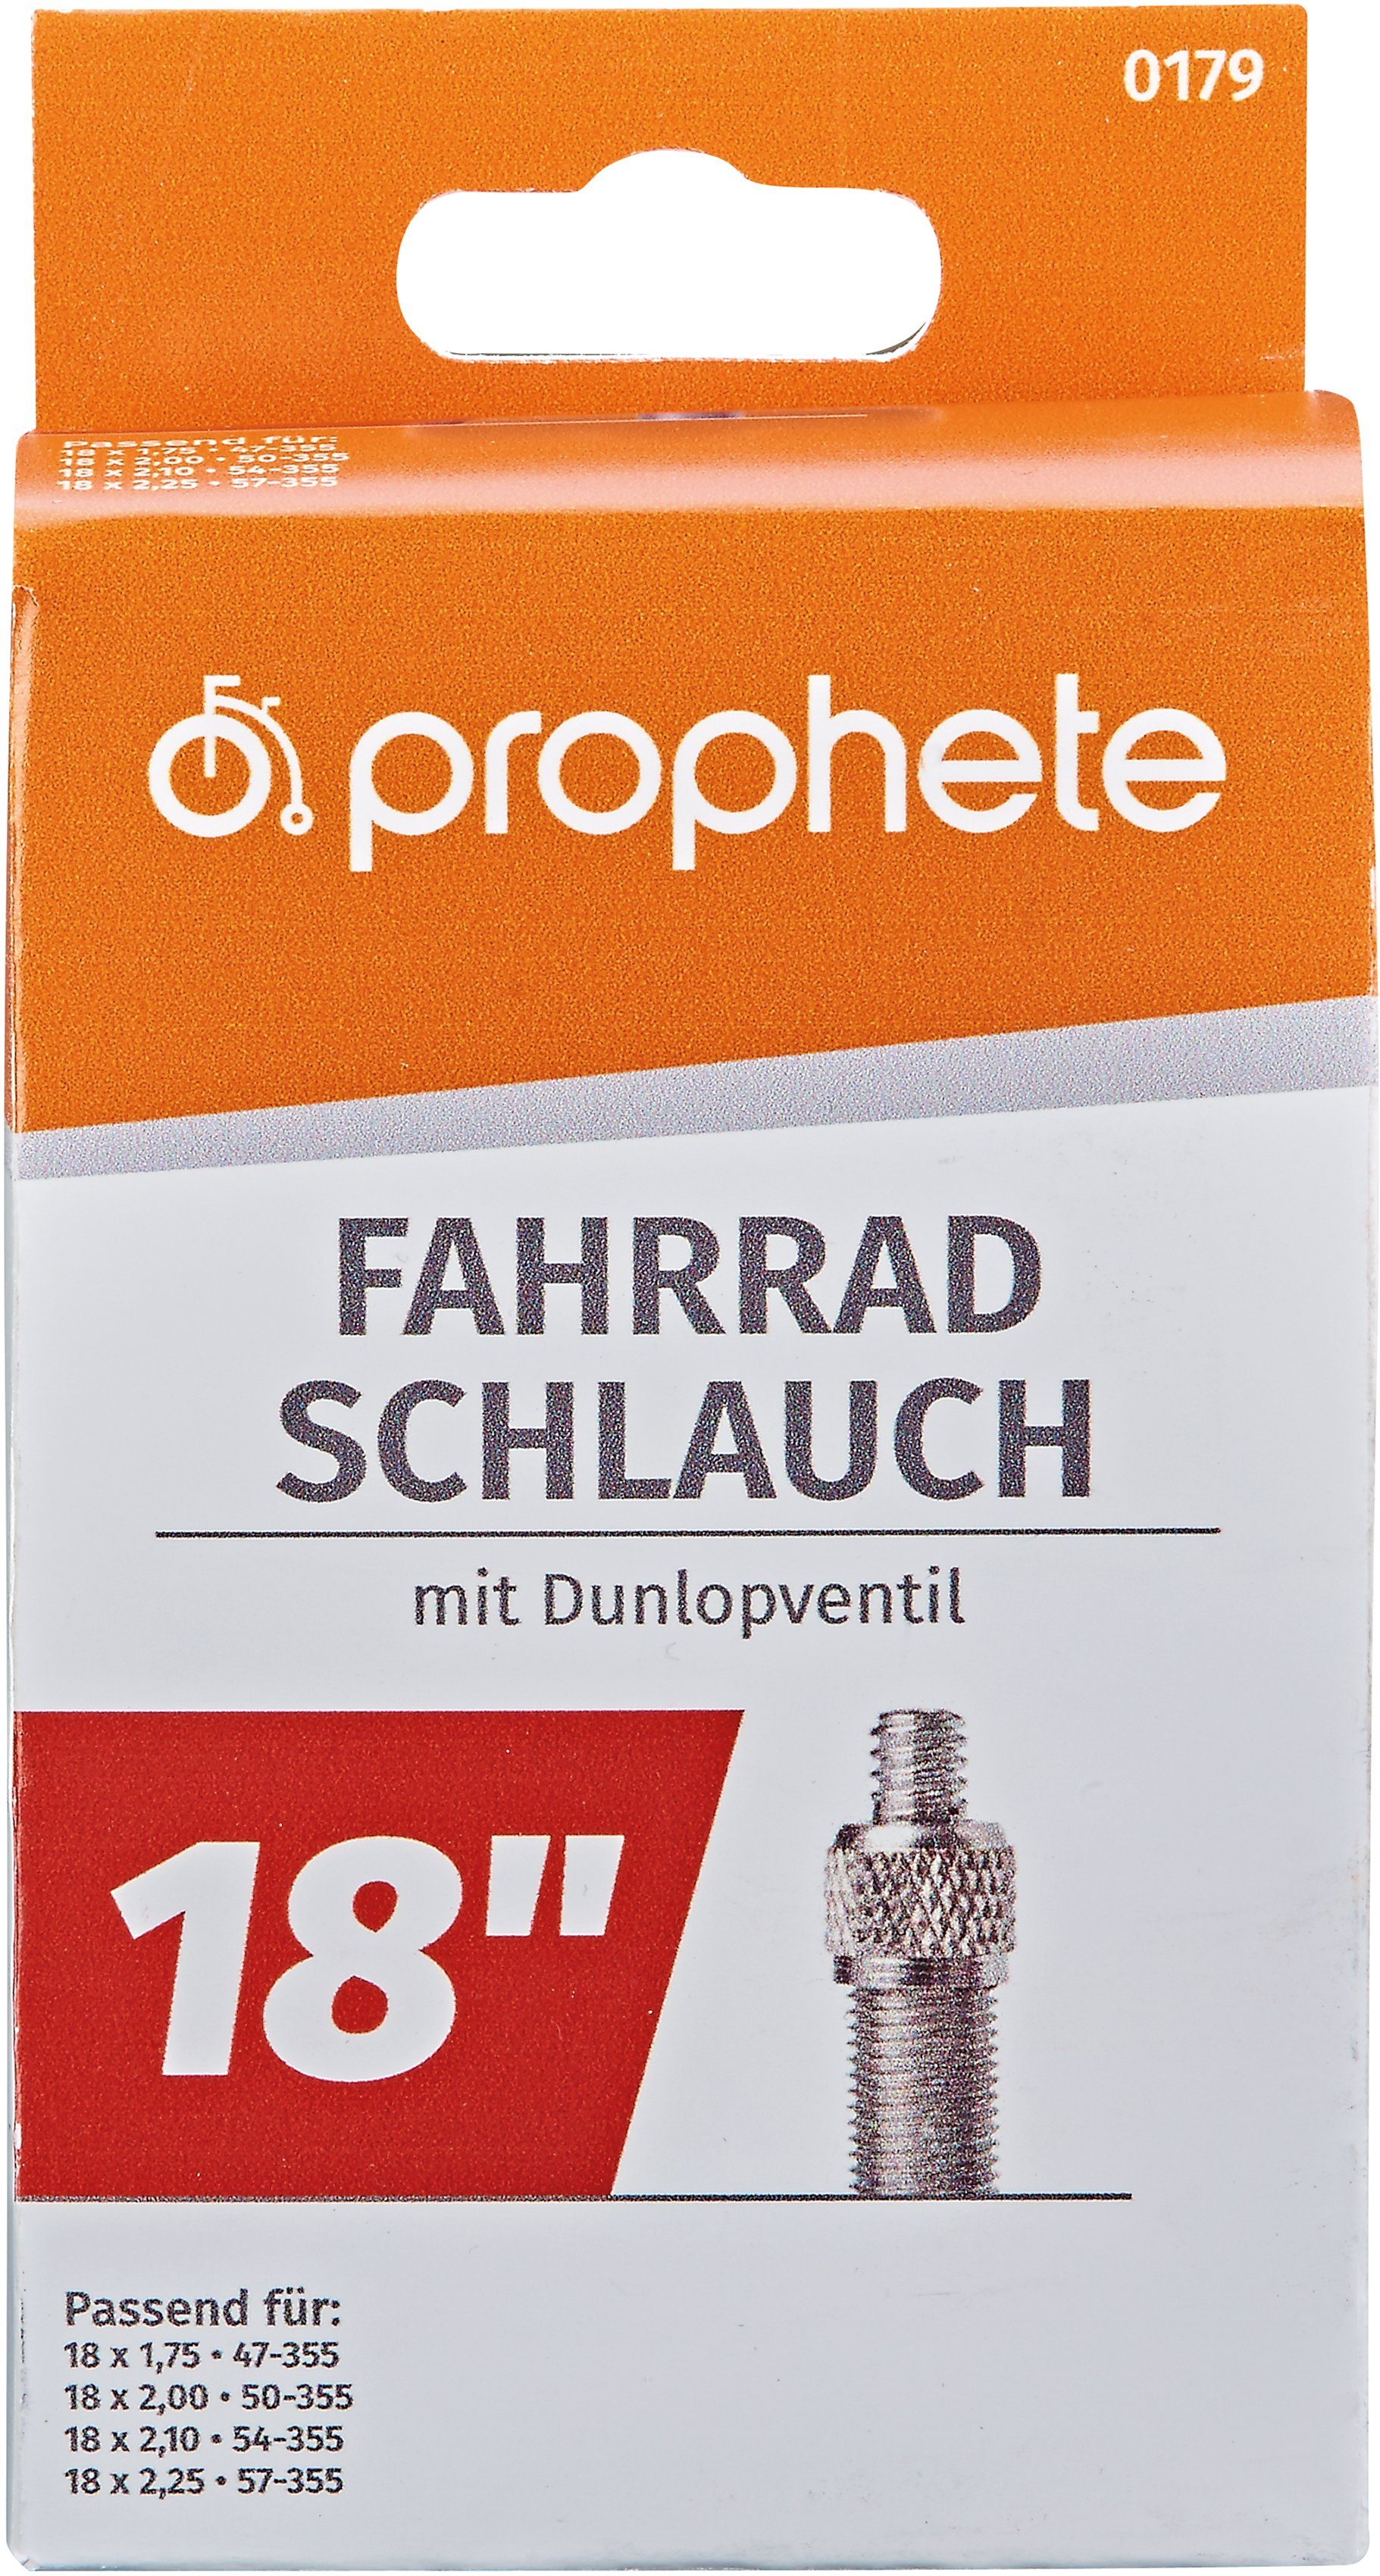 Prophete 18 Fahrradschlauch, Fahrradschlauch cm) (45,72 Zoll